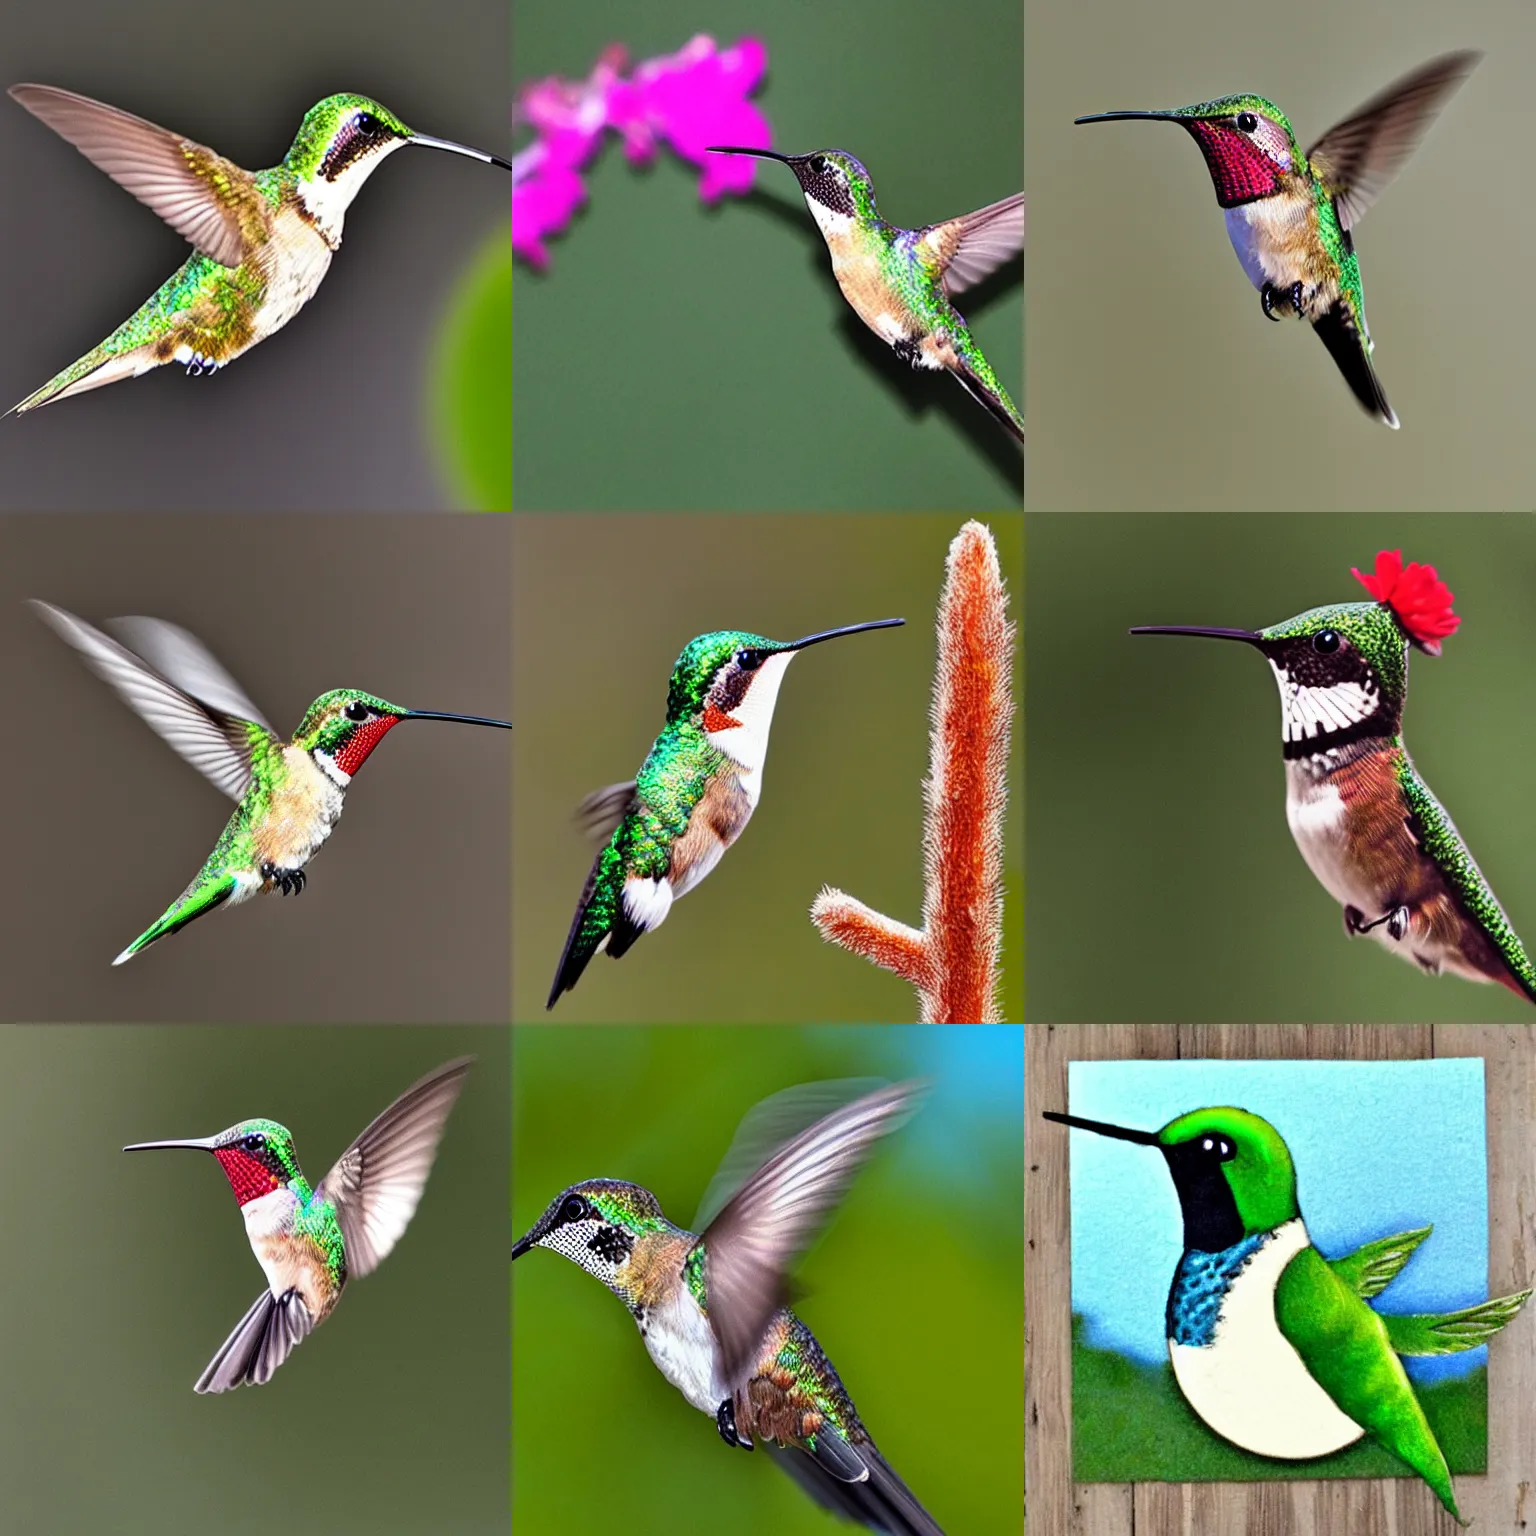 Prompt: a cute hummingbird